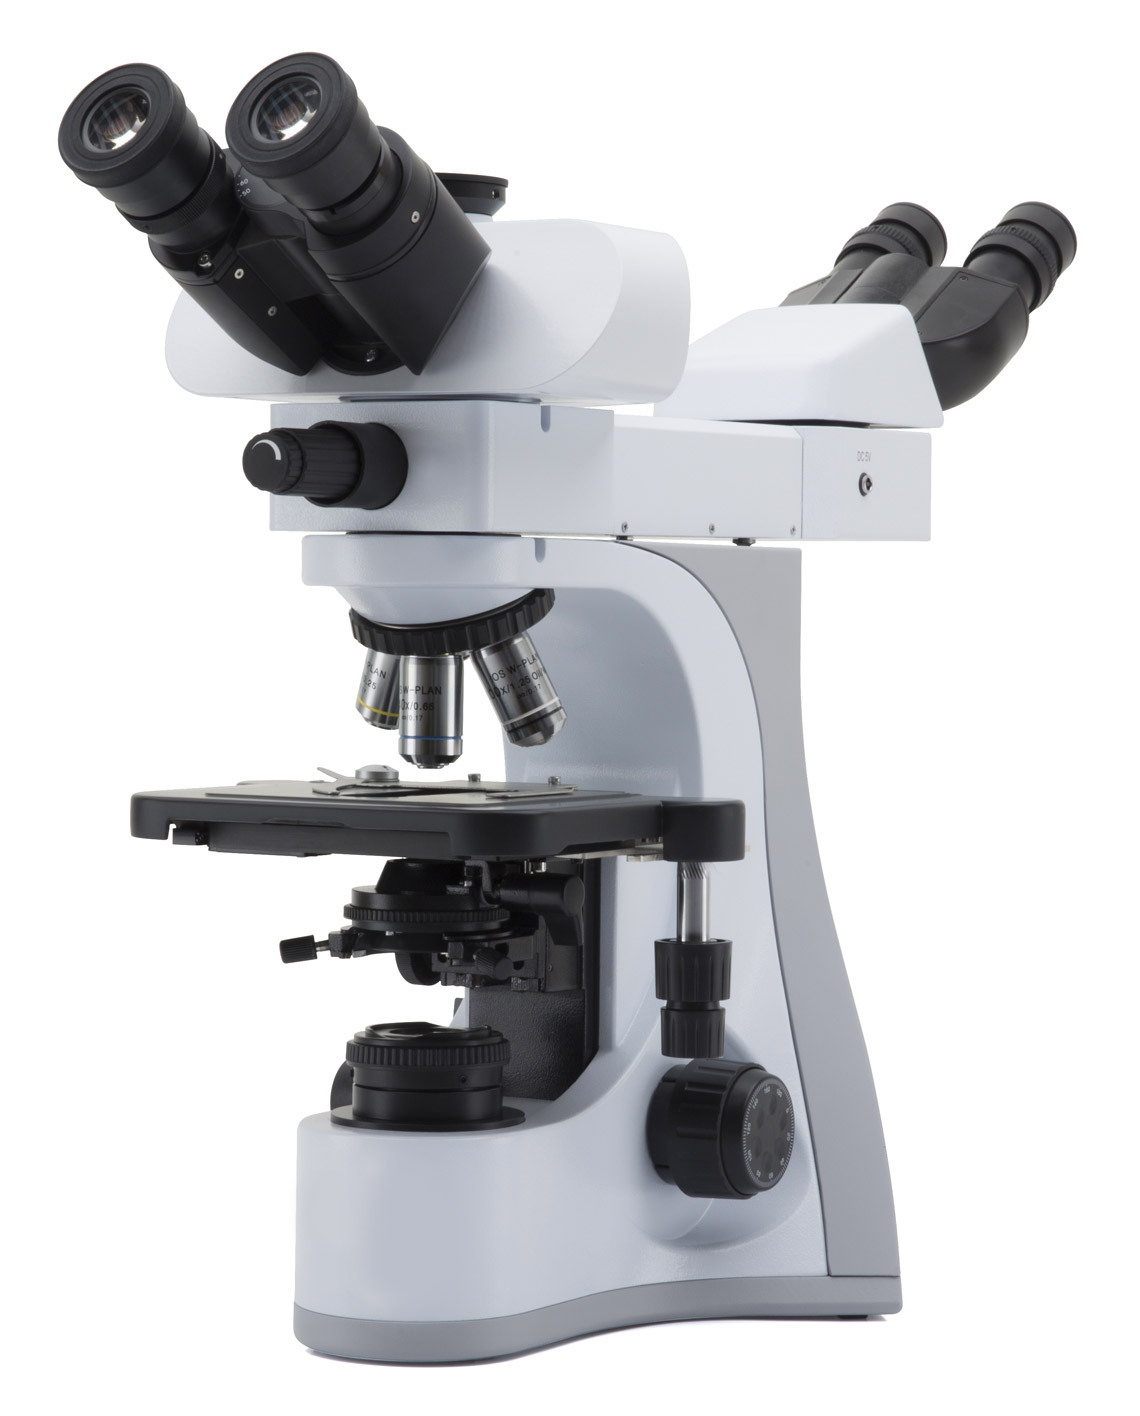 Dvouhlav uebn mikroskop - B-510-2F